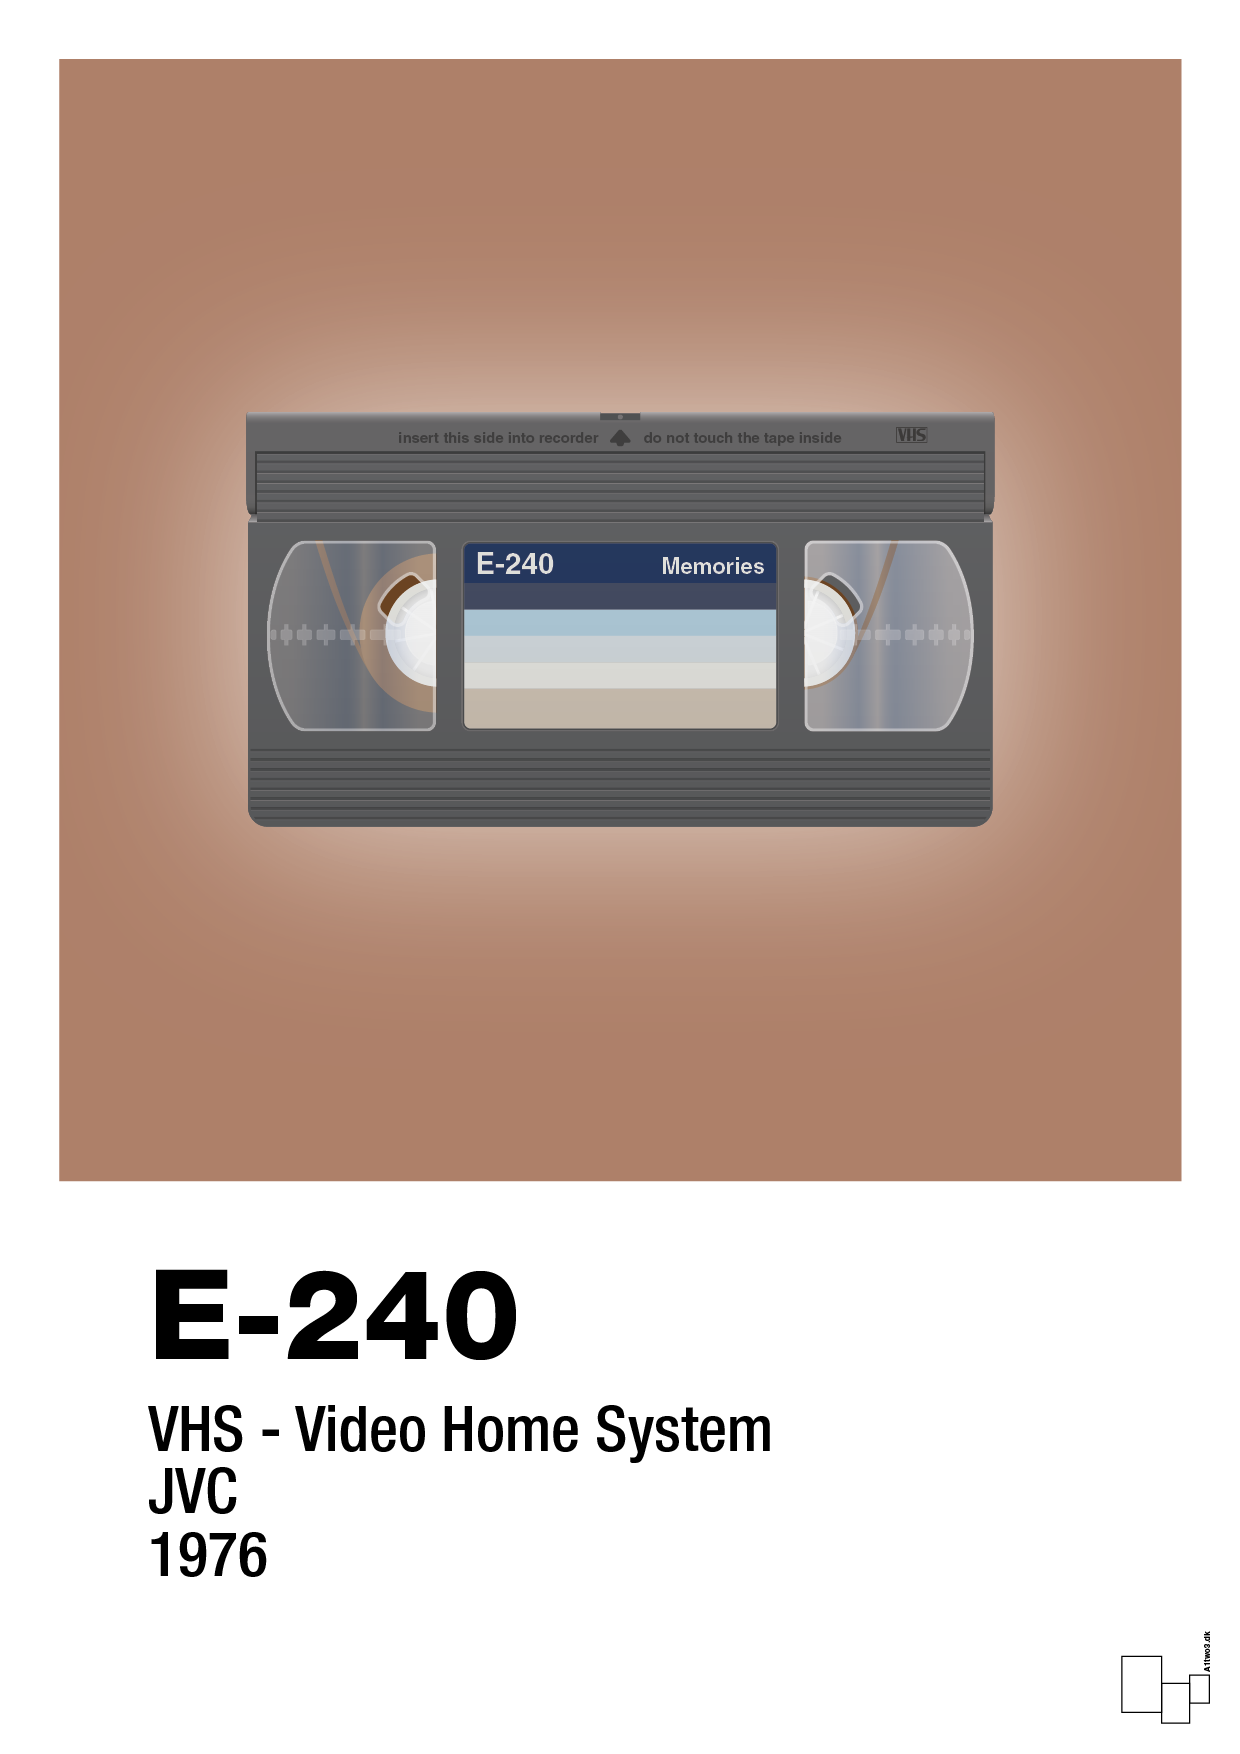 videobånd e-240 - Plakat med Grafik i Cider Spice